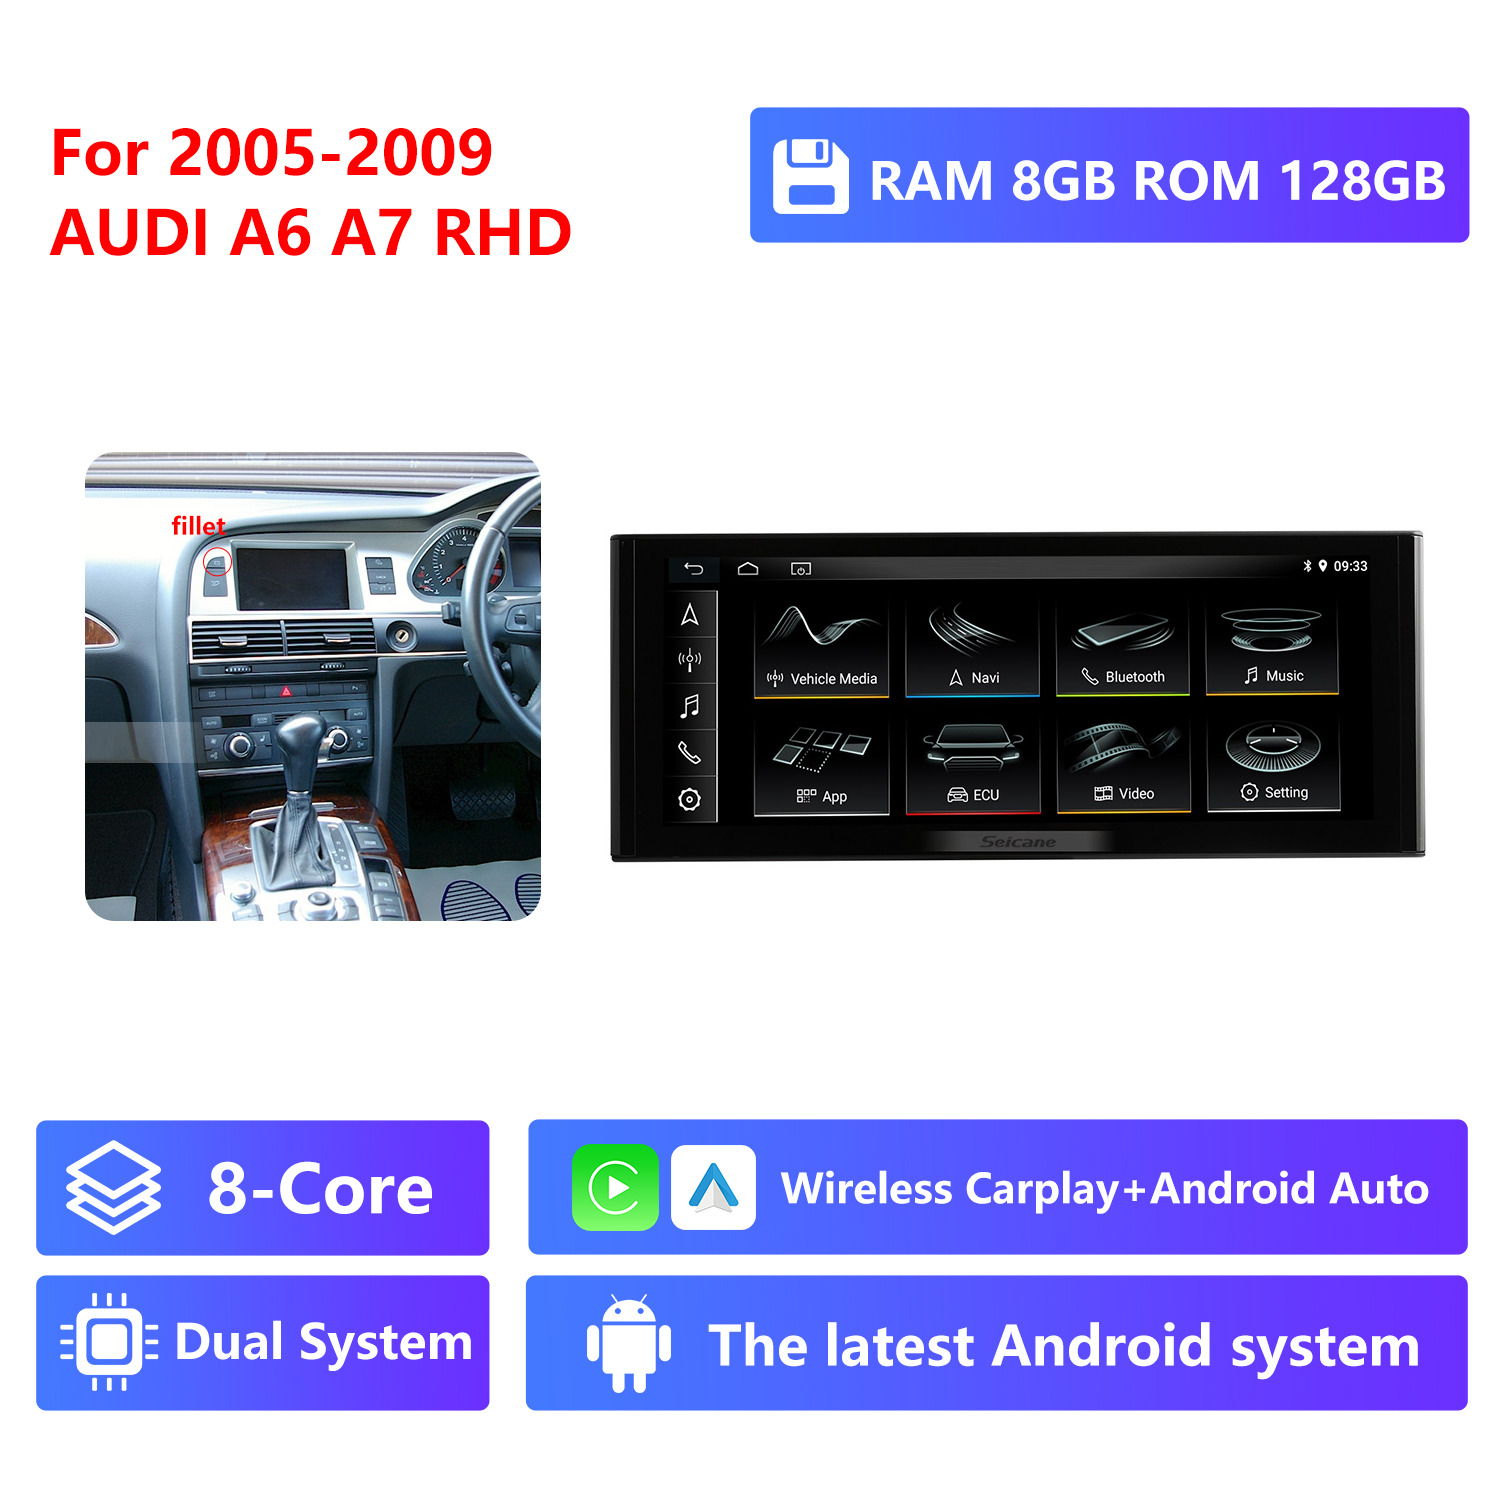 8-Core RAM 8G ROM 128G,2005-2009,RHD